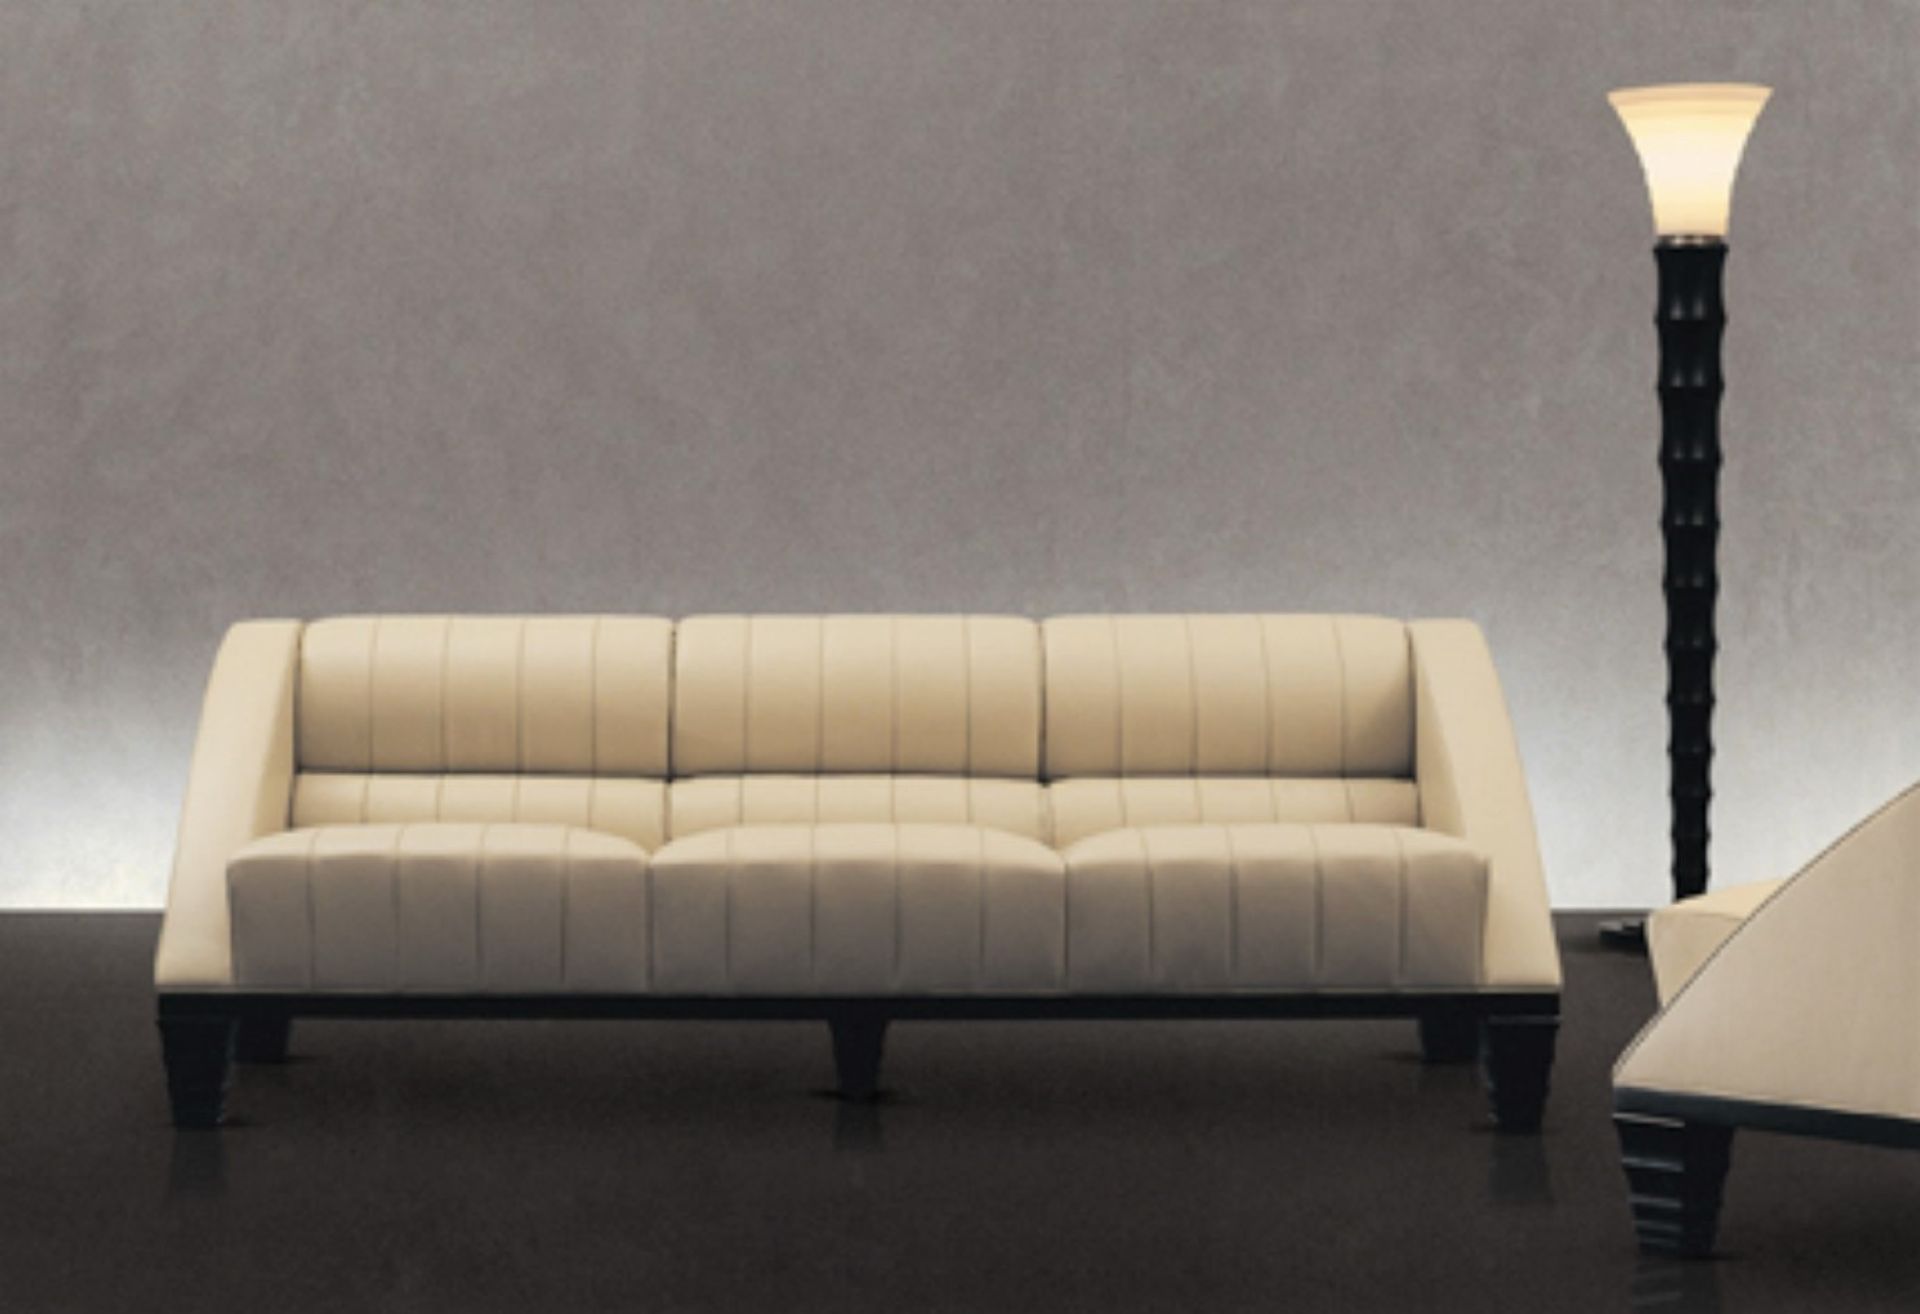 1 x Giorgetti Aries Three Seater Leather Sofa - Designed by Leon Krier - Contemporary Sofa